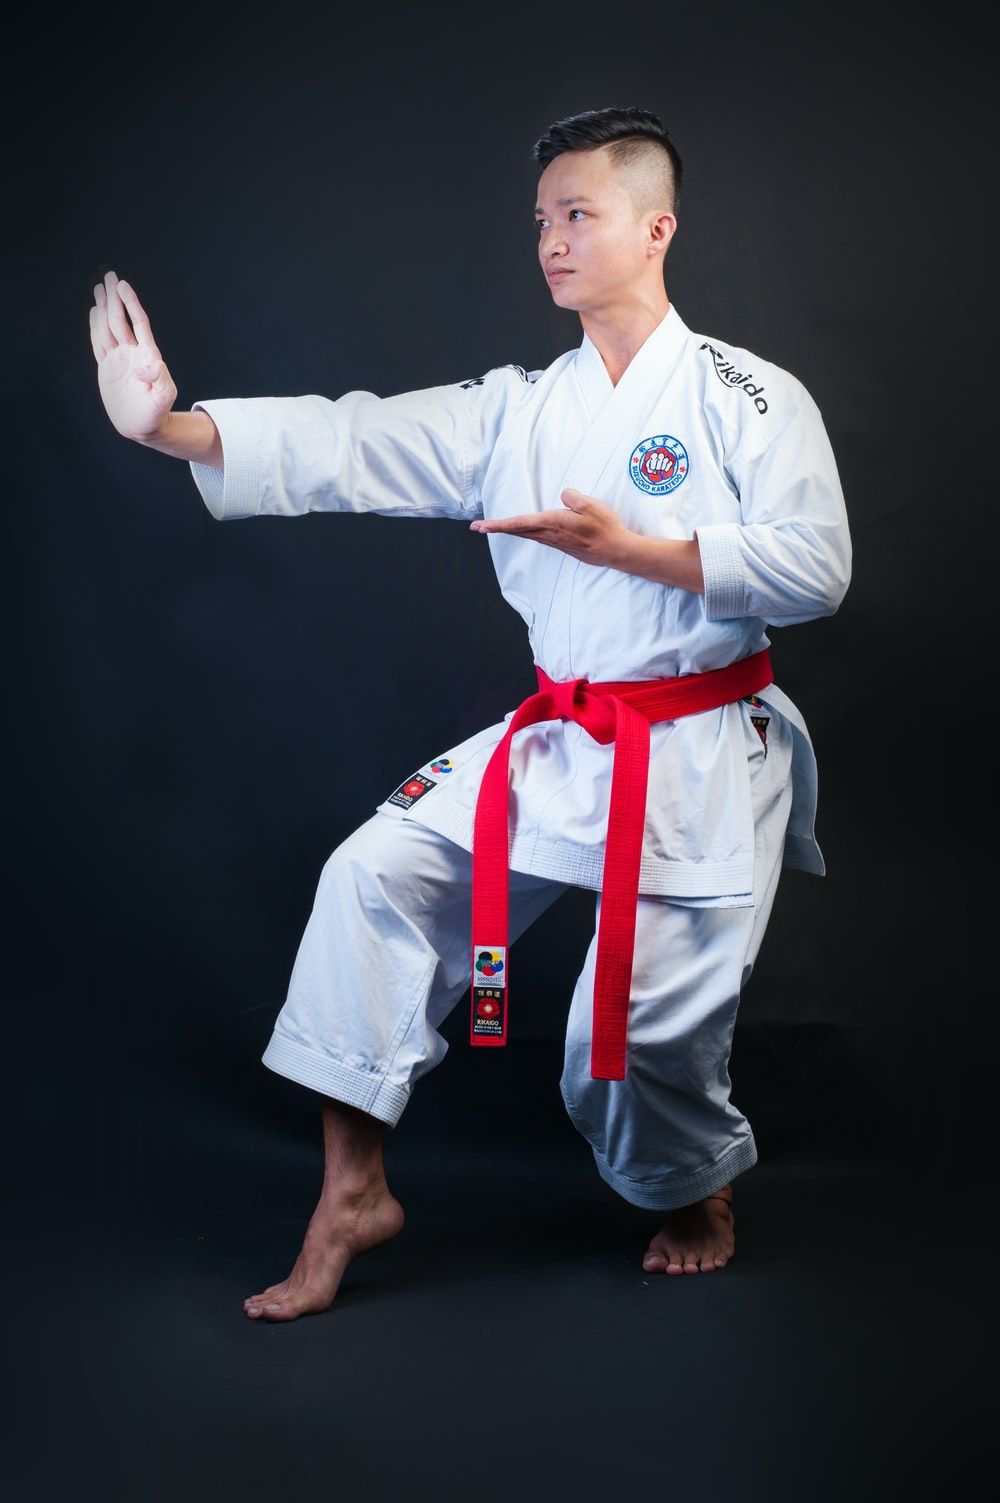 Karate Kick Picture. Download Free Image